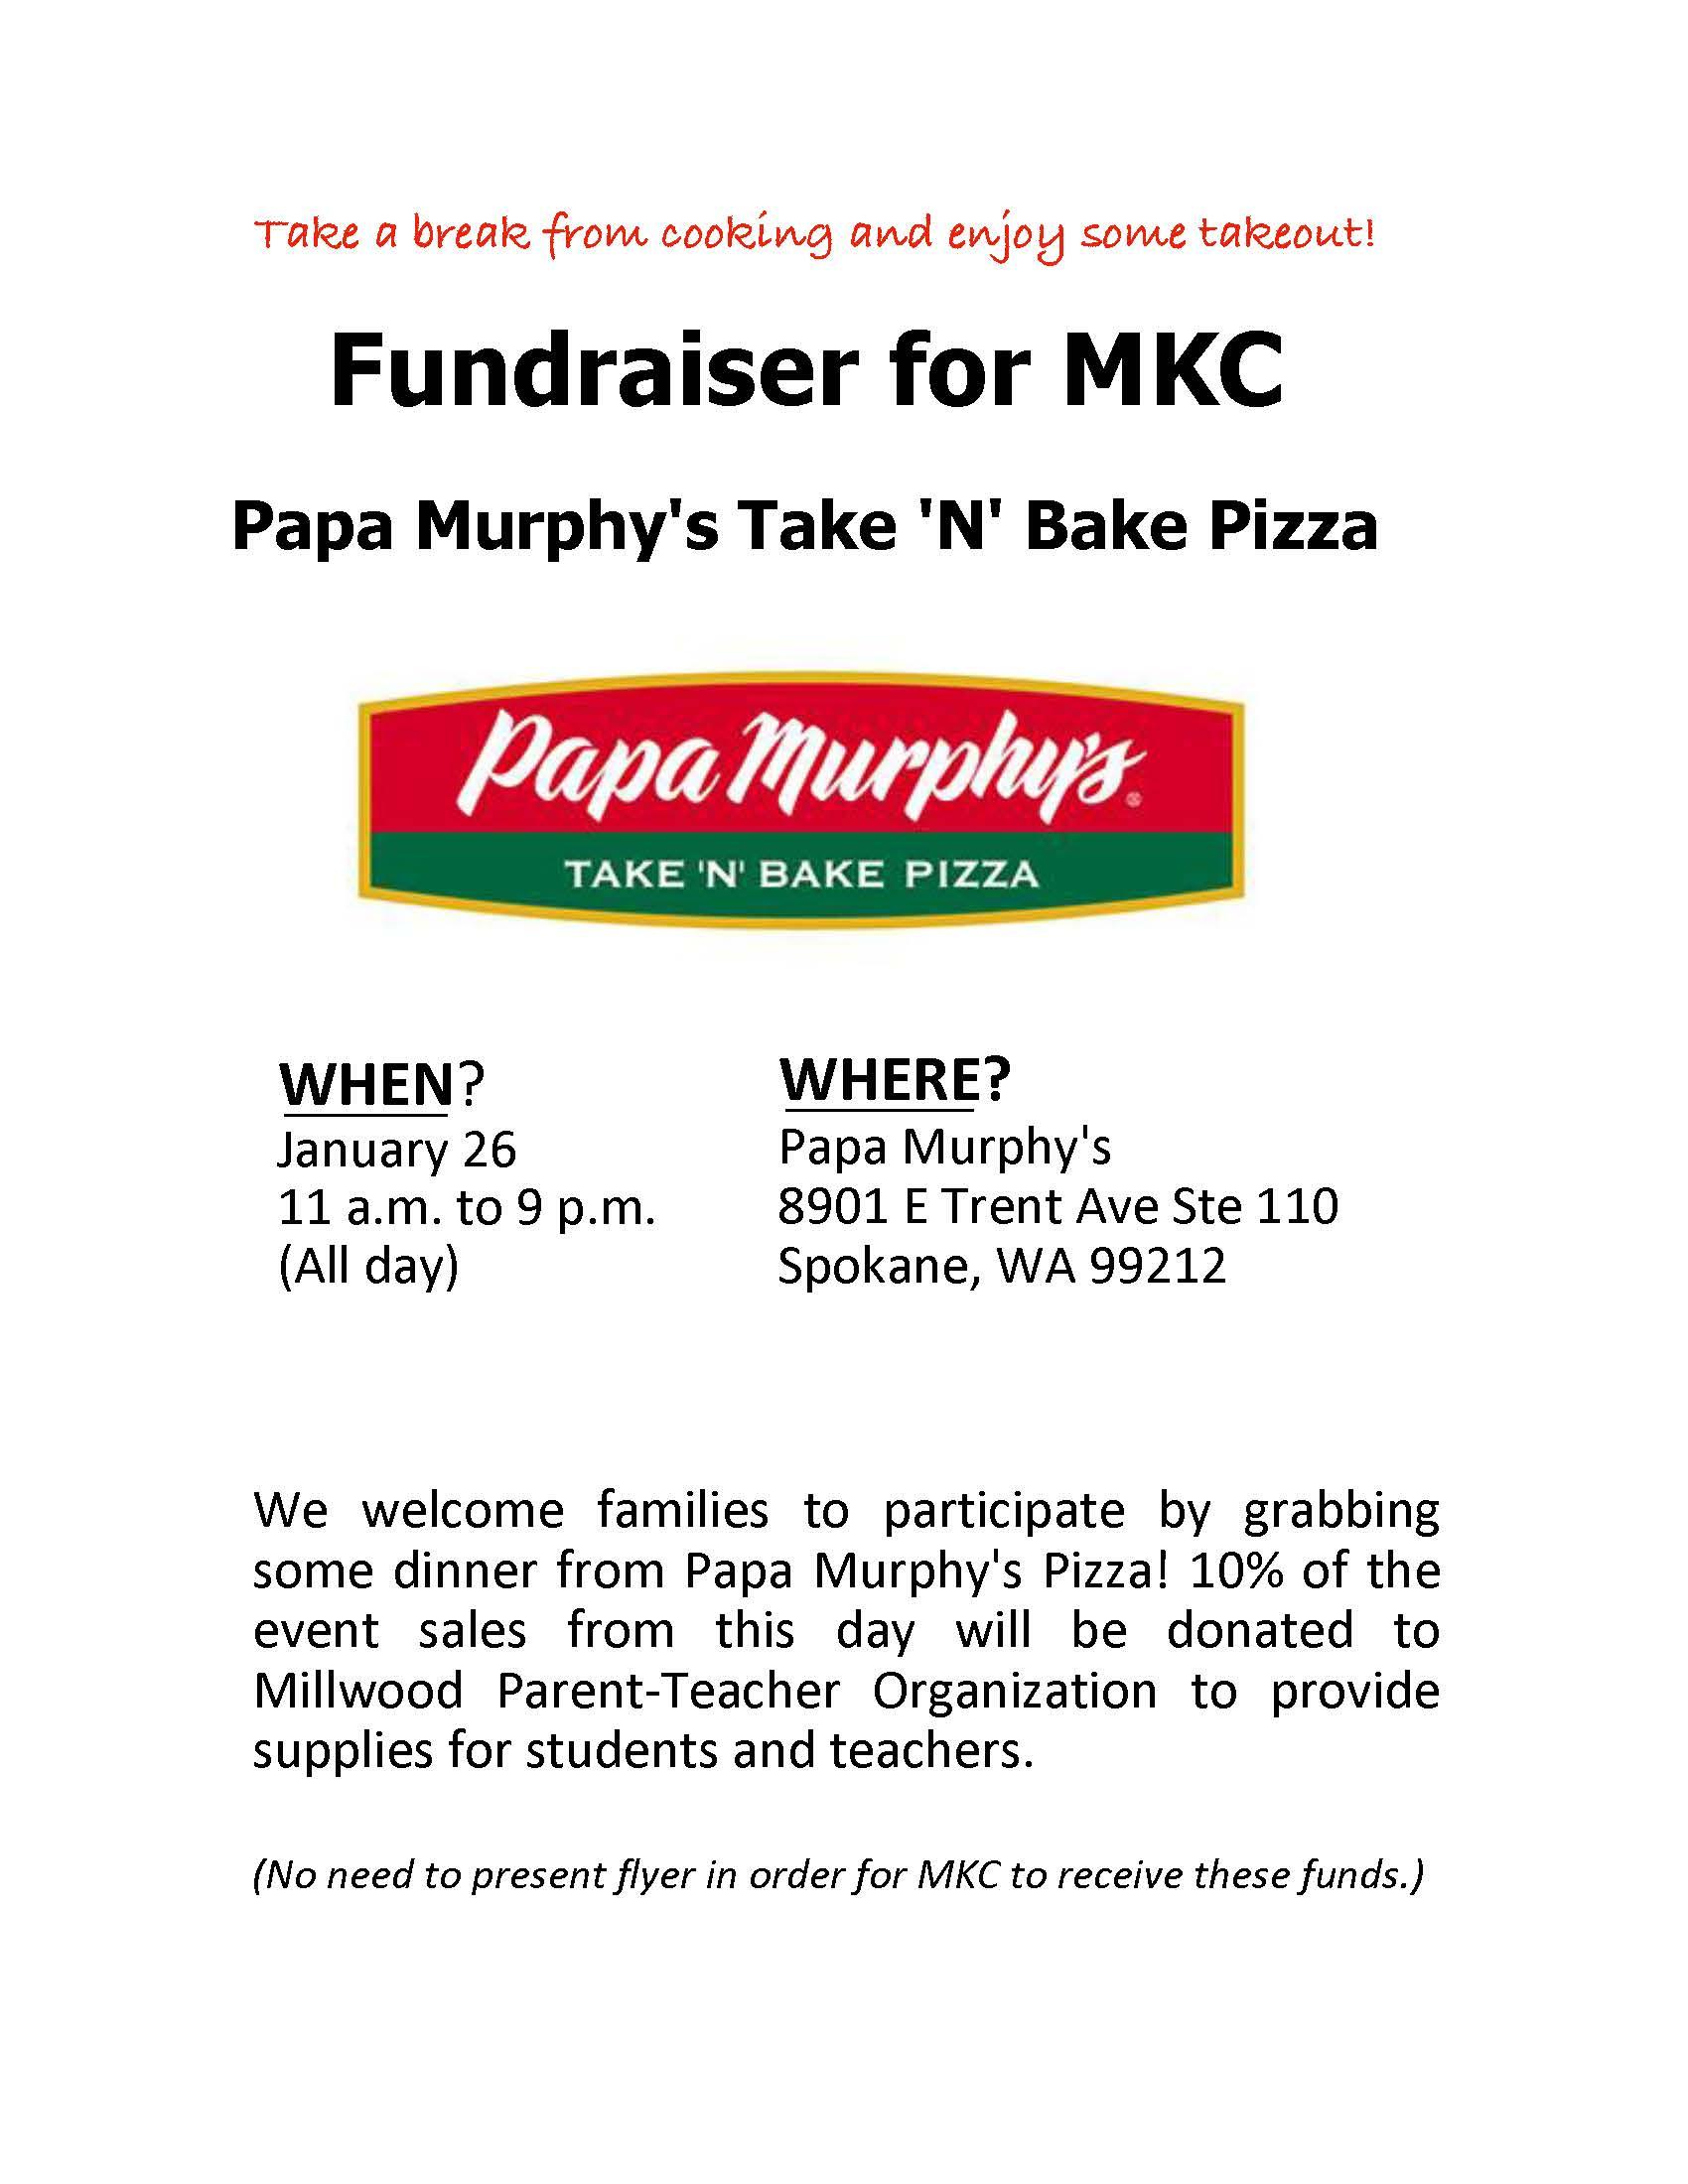 Papa Murphy's fundraiser